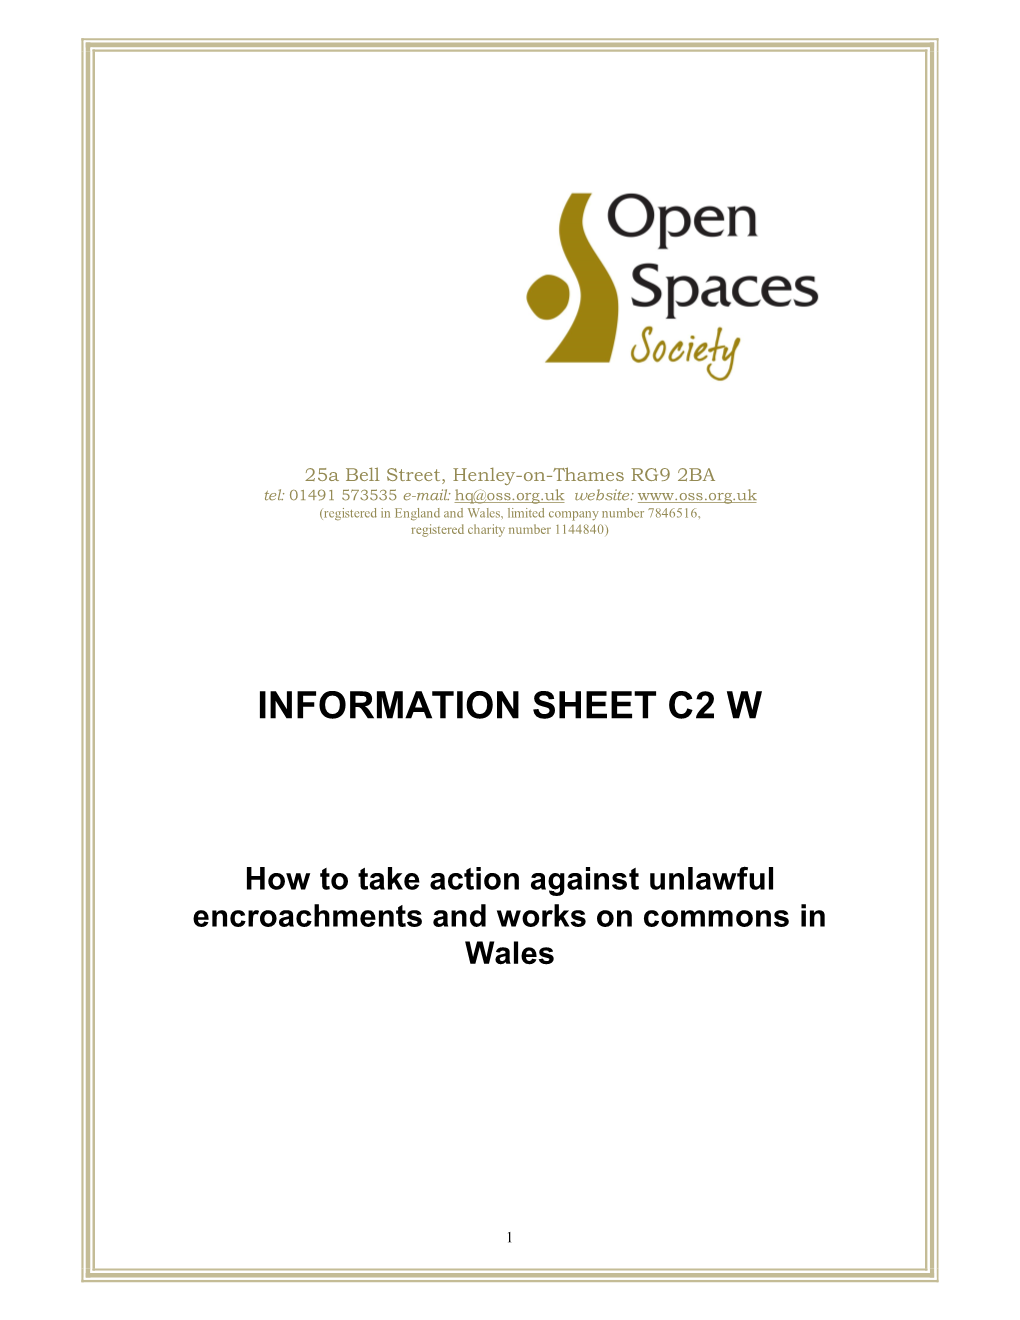 Information Sheet C2 W